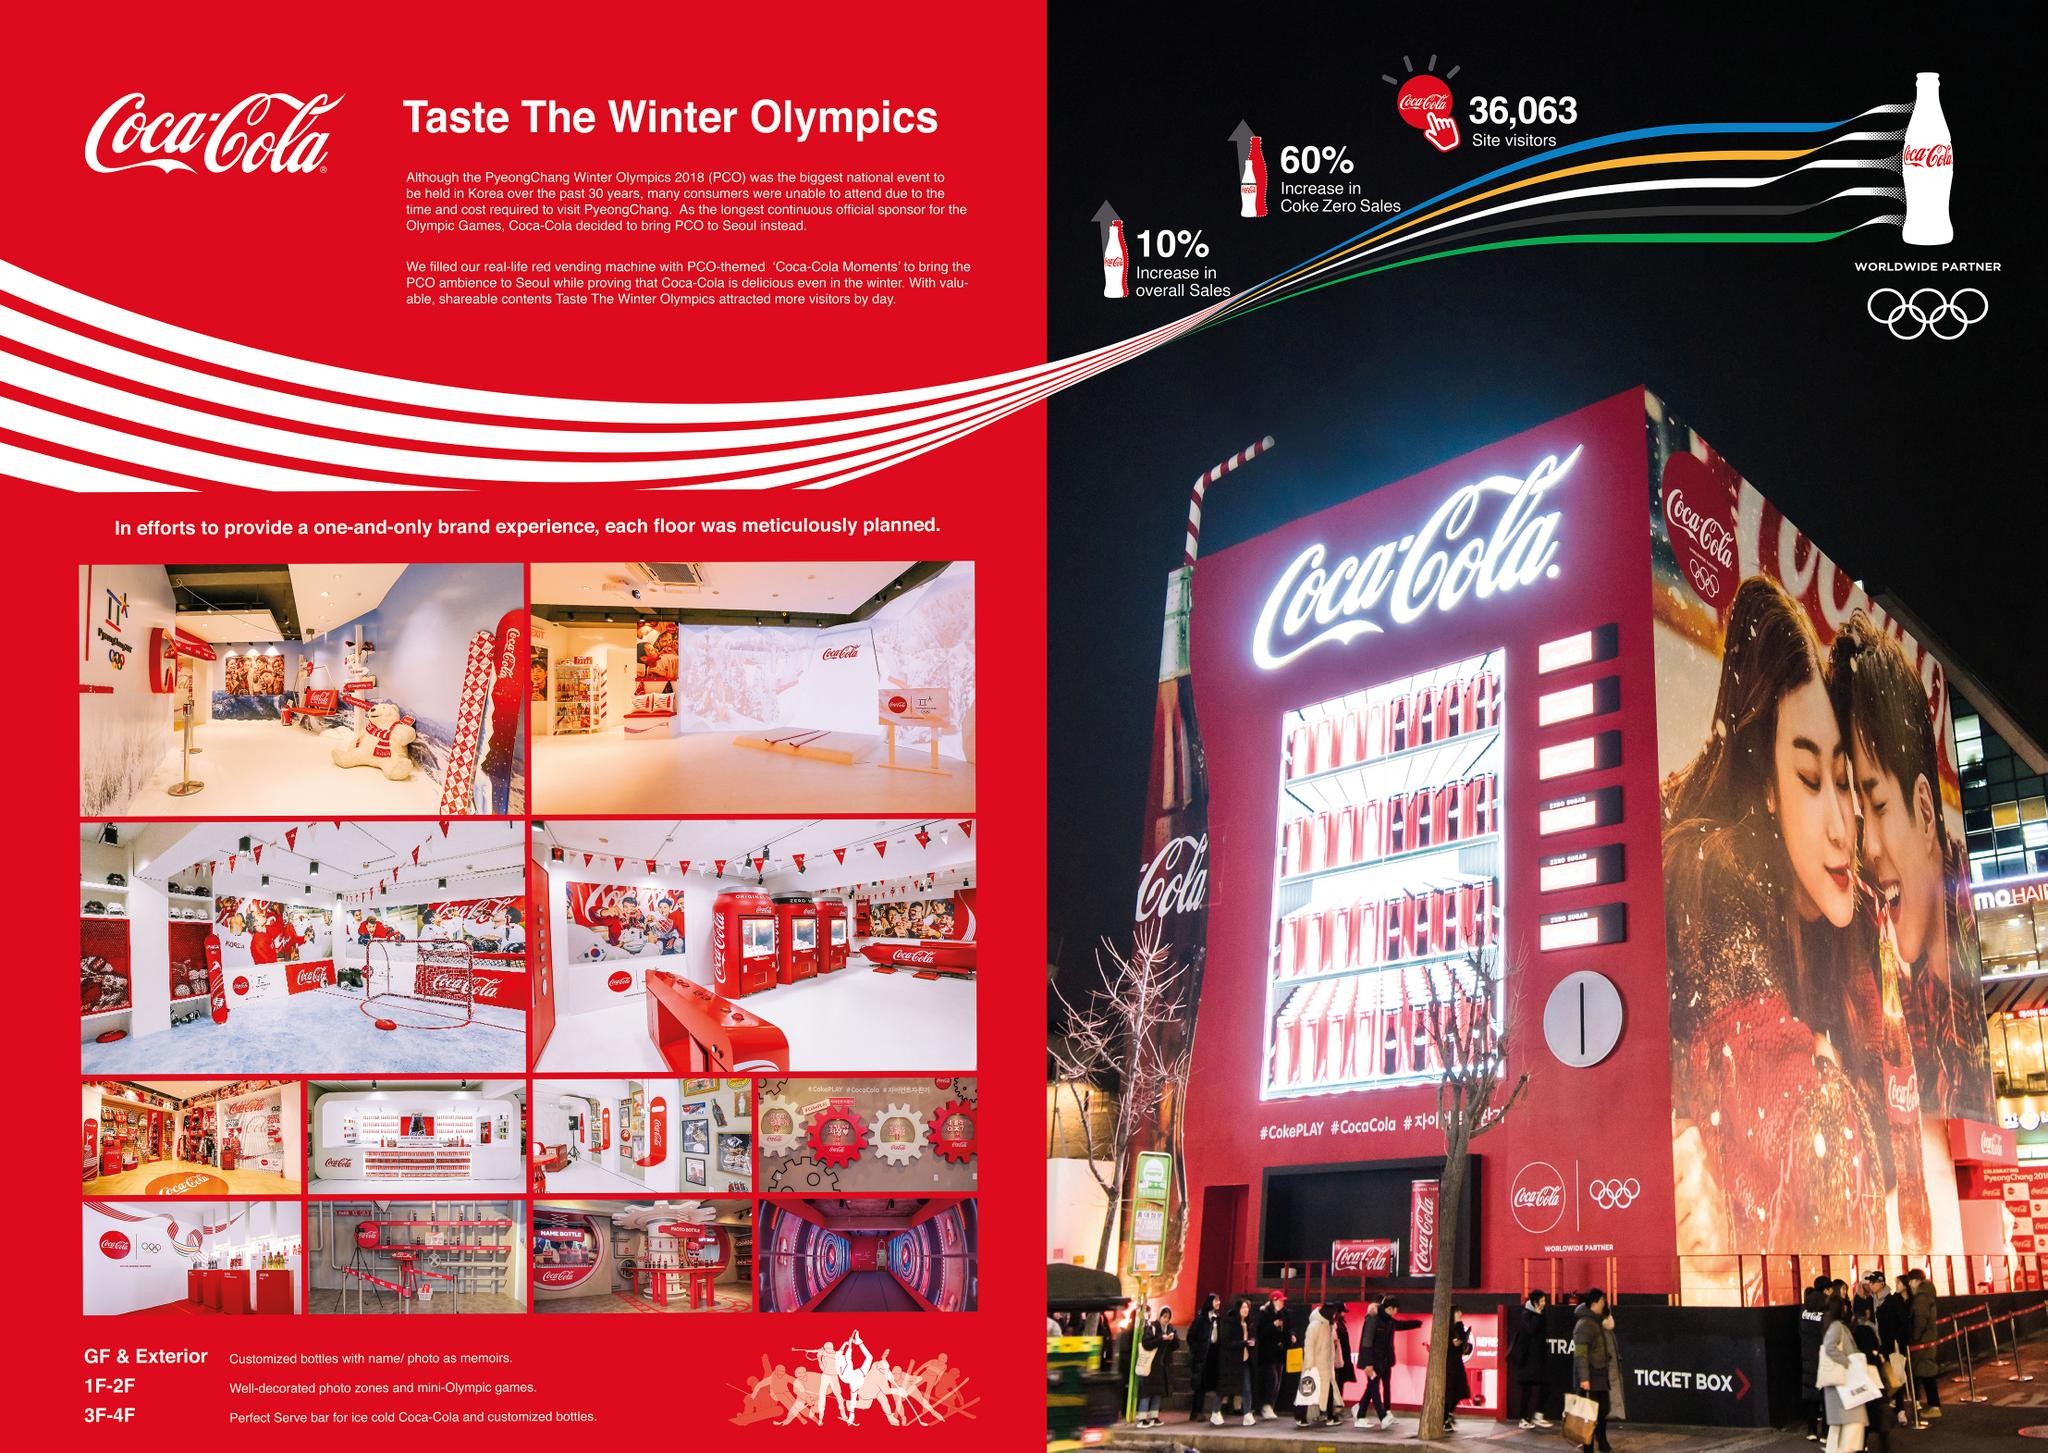 Taste the Winter Olympics